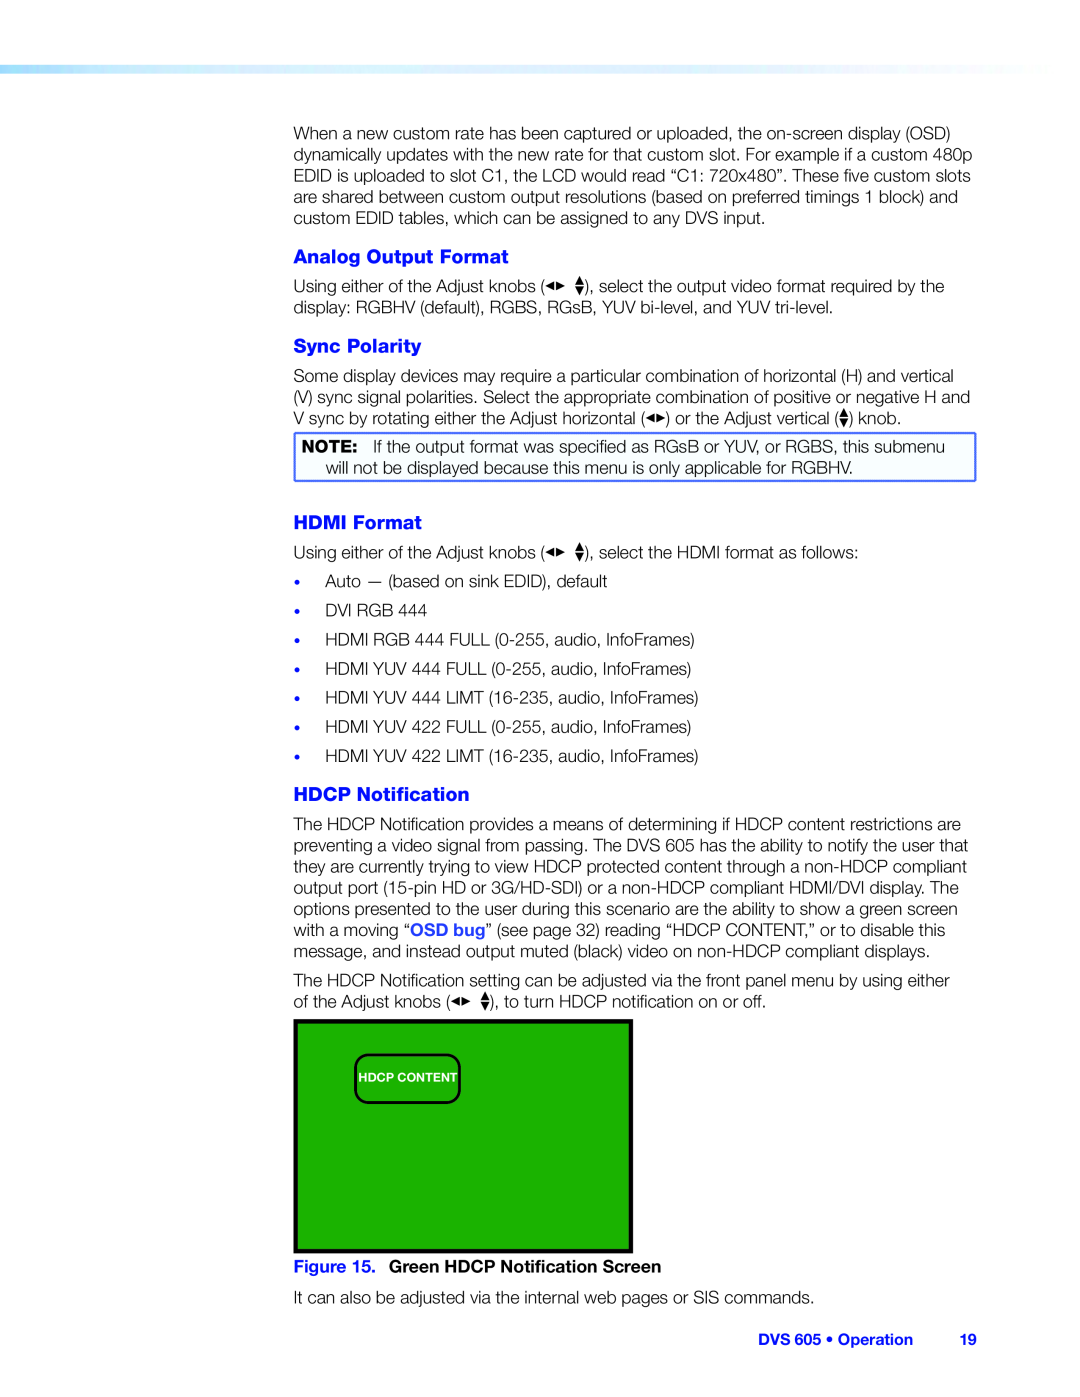 Extron electronic DVS 605 manual Analog Output Format, Sync Polarity, HDMI Format, HDCP Notification 